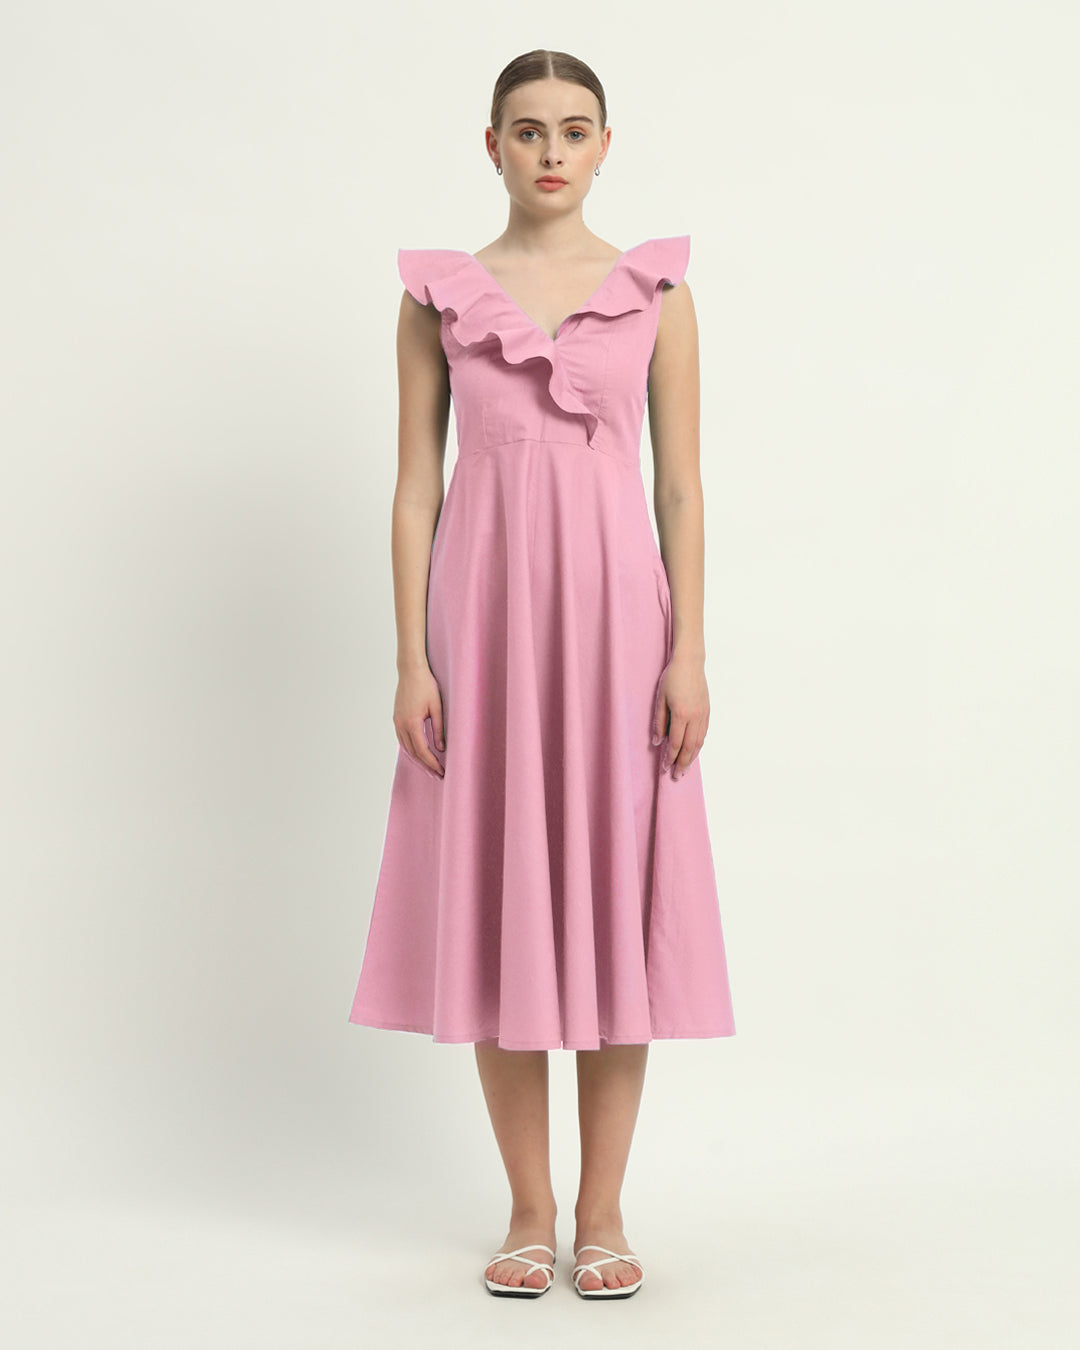 The Fondant Pink Albany Cotton Dress